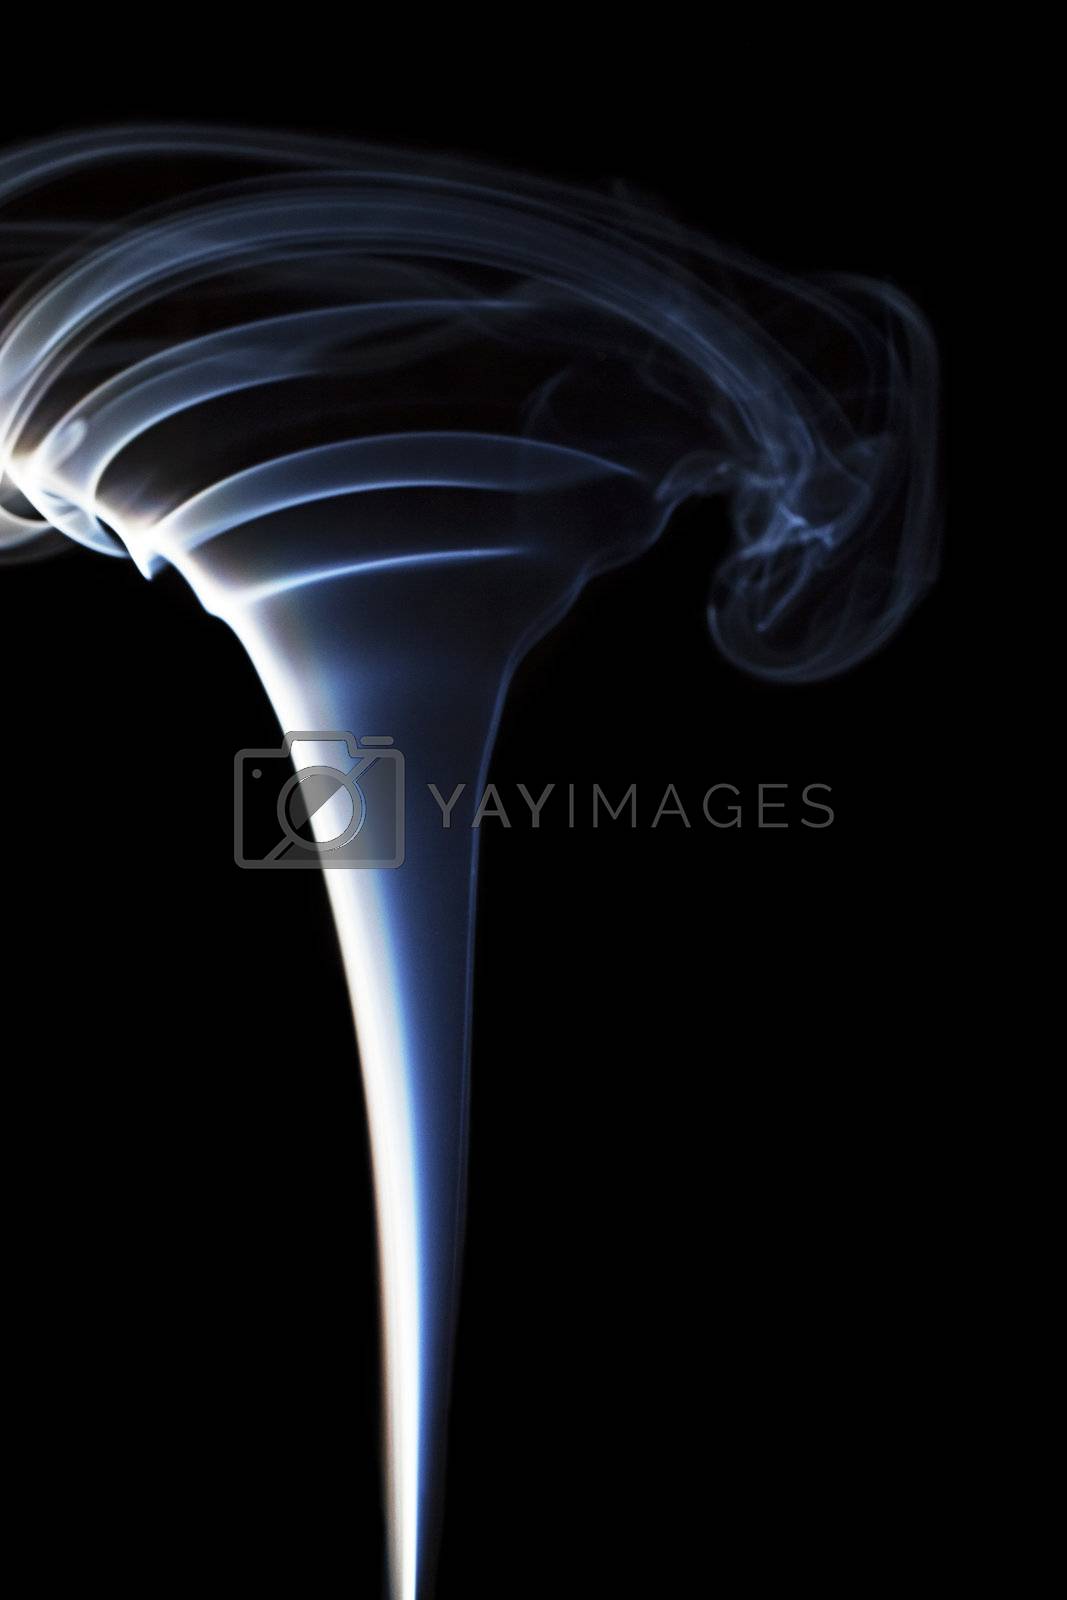 Royalty free image of tornado like smoke on black by RobStark